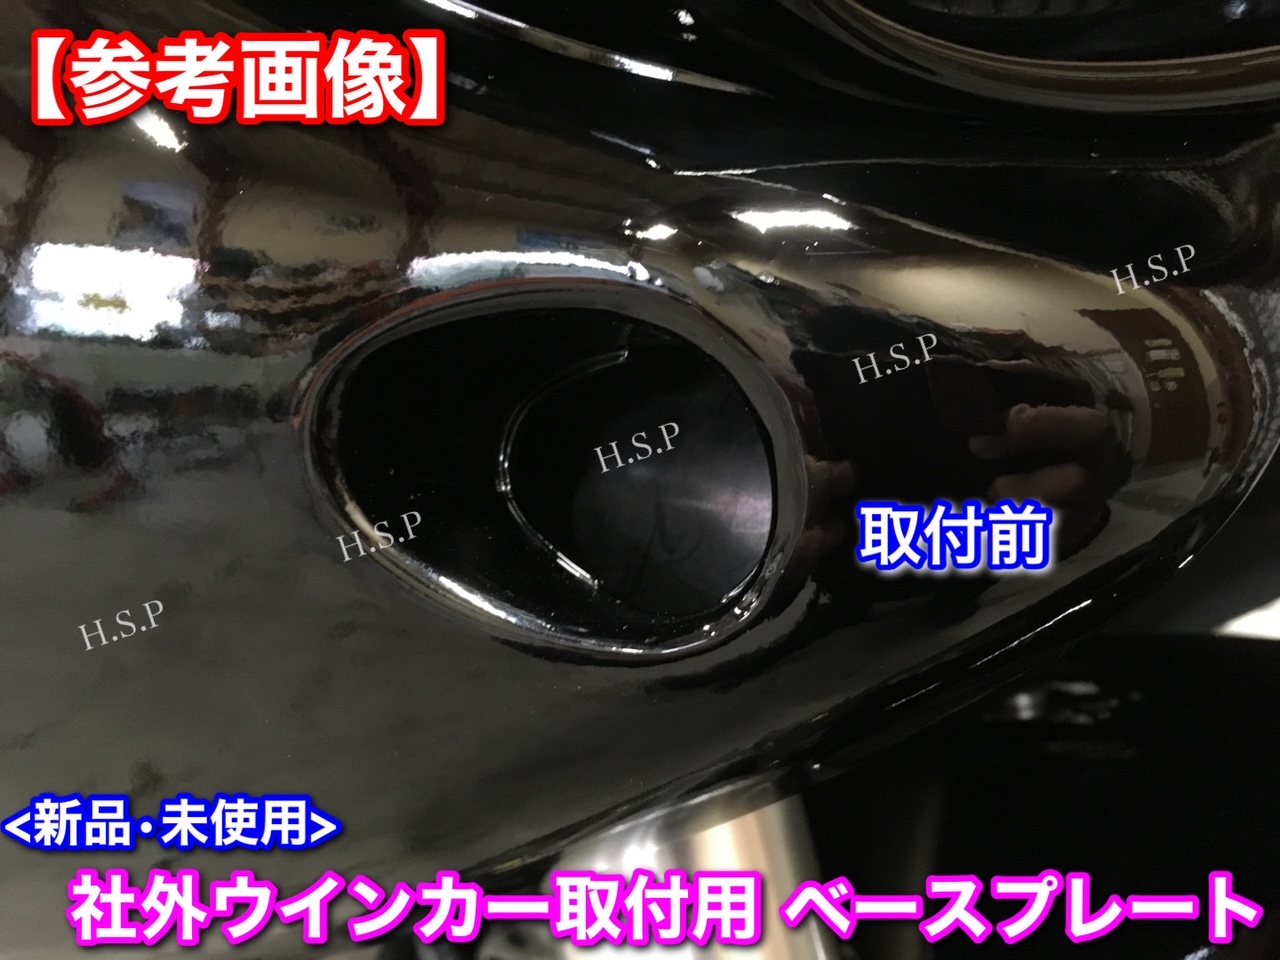  Suzuki указатель поворота основа 4 листов SET оригинальный - неоригинальный указатель поворота .TL1000S GSX-R600 GSX-R750 SV650 TL1000R XF650 VT51A крепление plate установка замена 